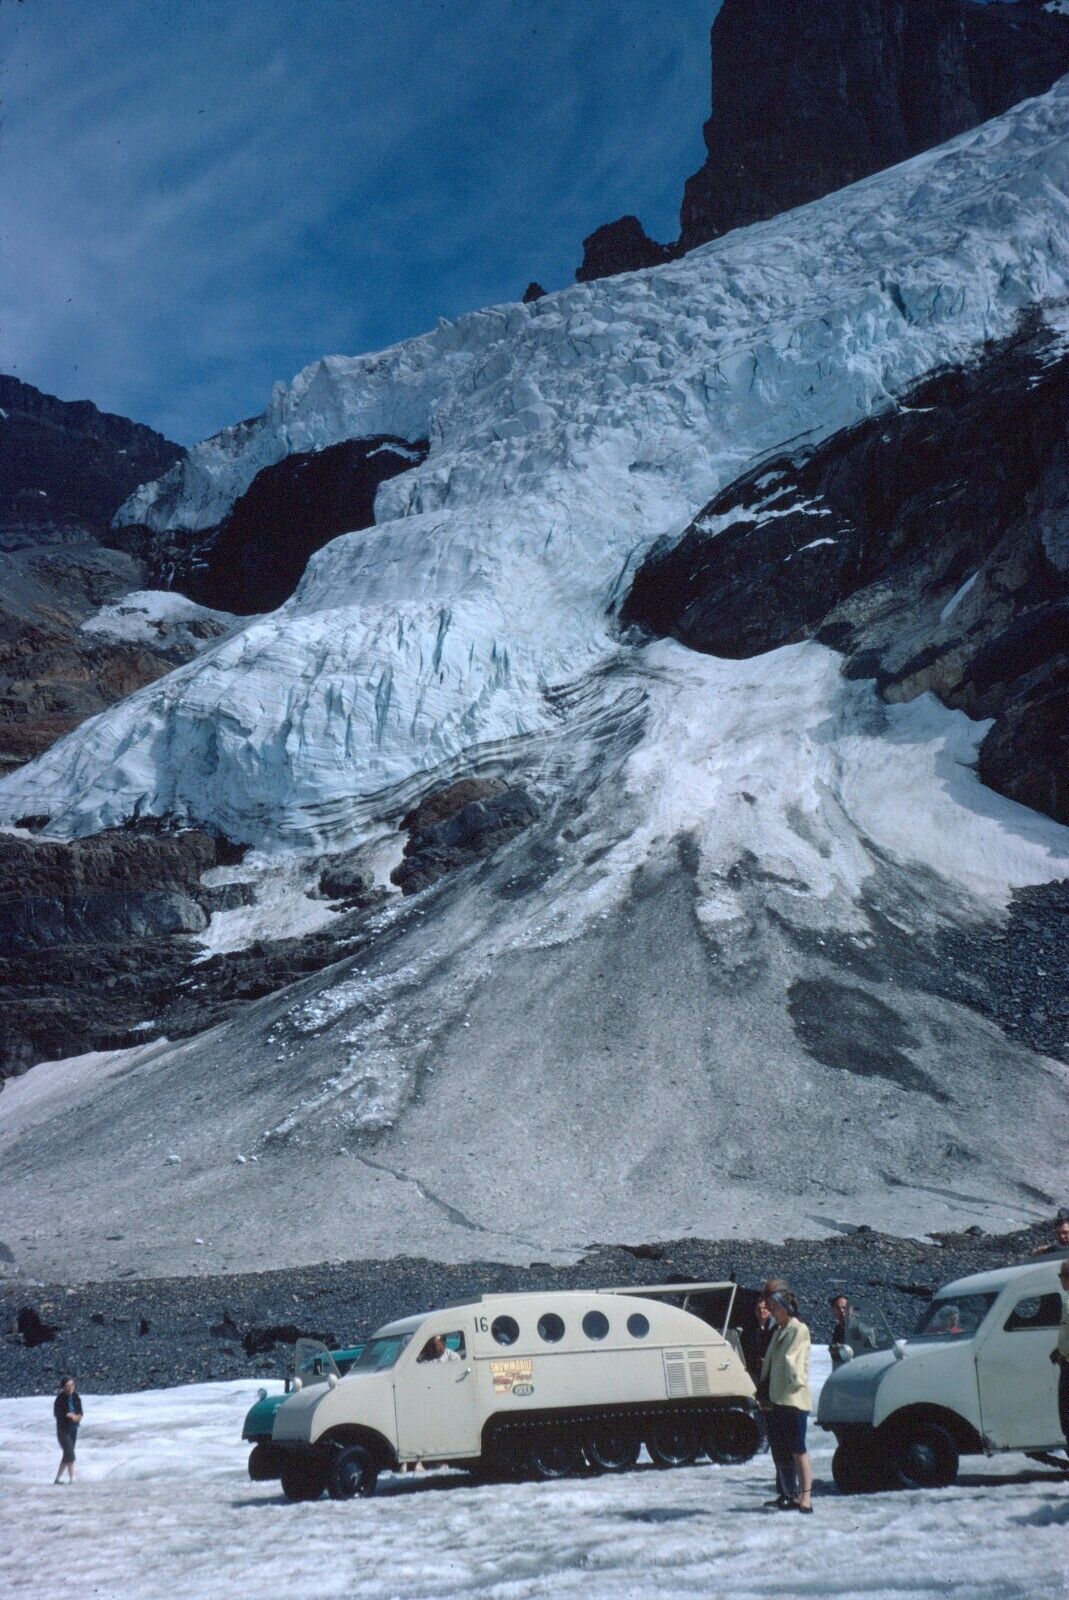 1967 Bombardier Snowmobile Athabasca Glacier Jasper Nat\'l Park Canada 35mm Slide